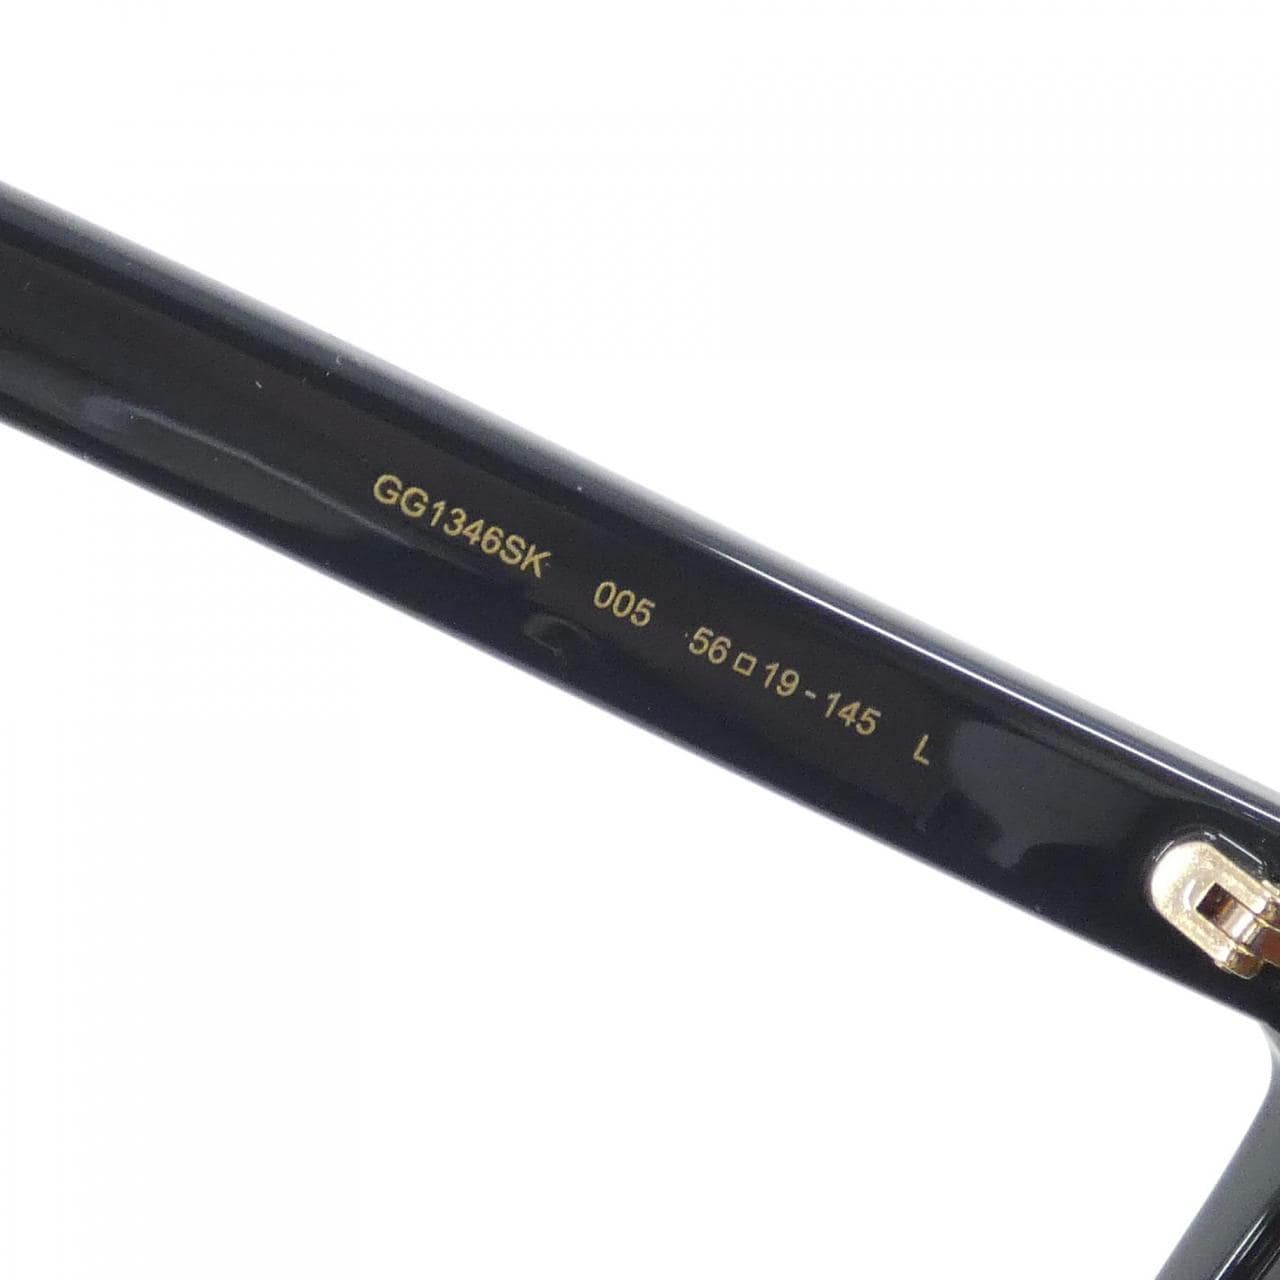 [新品] Gucci 1346SK 太阳镜